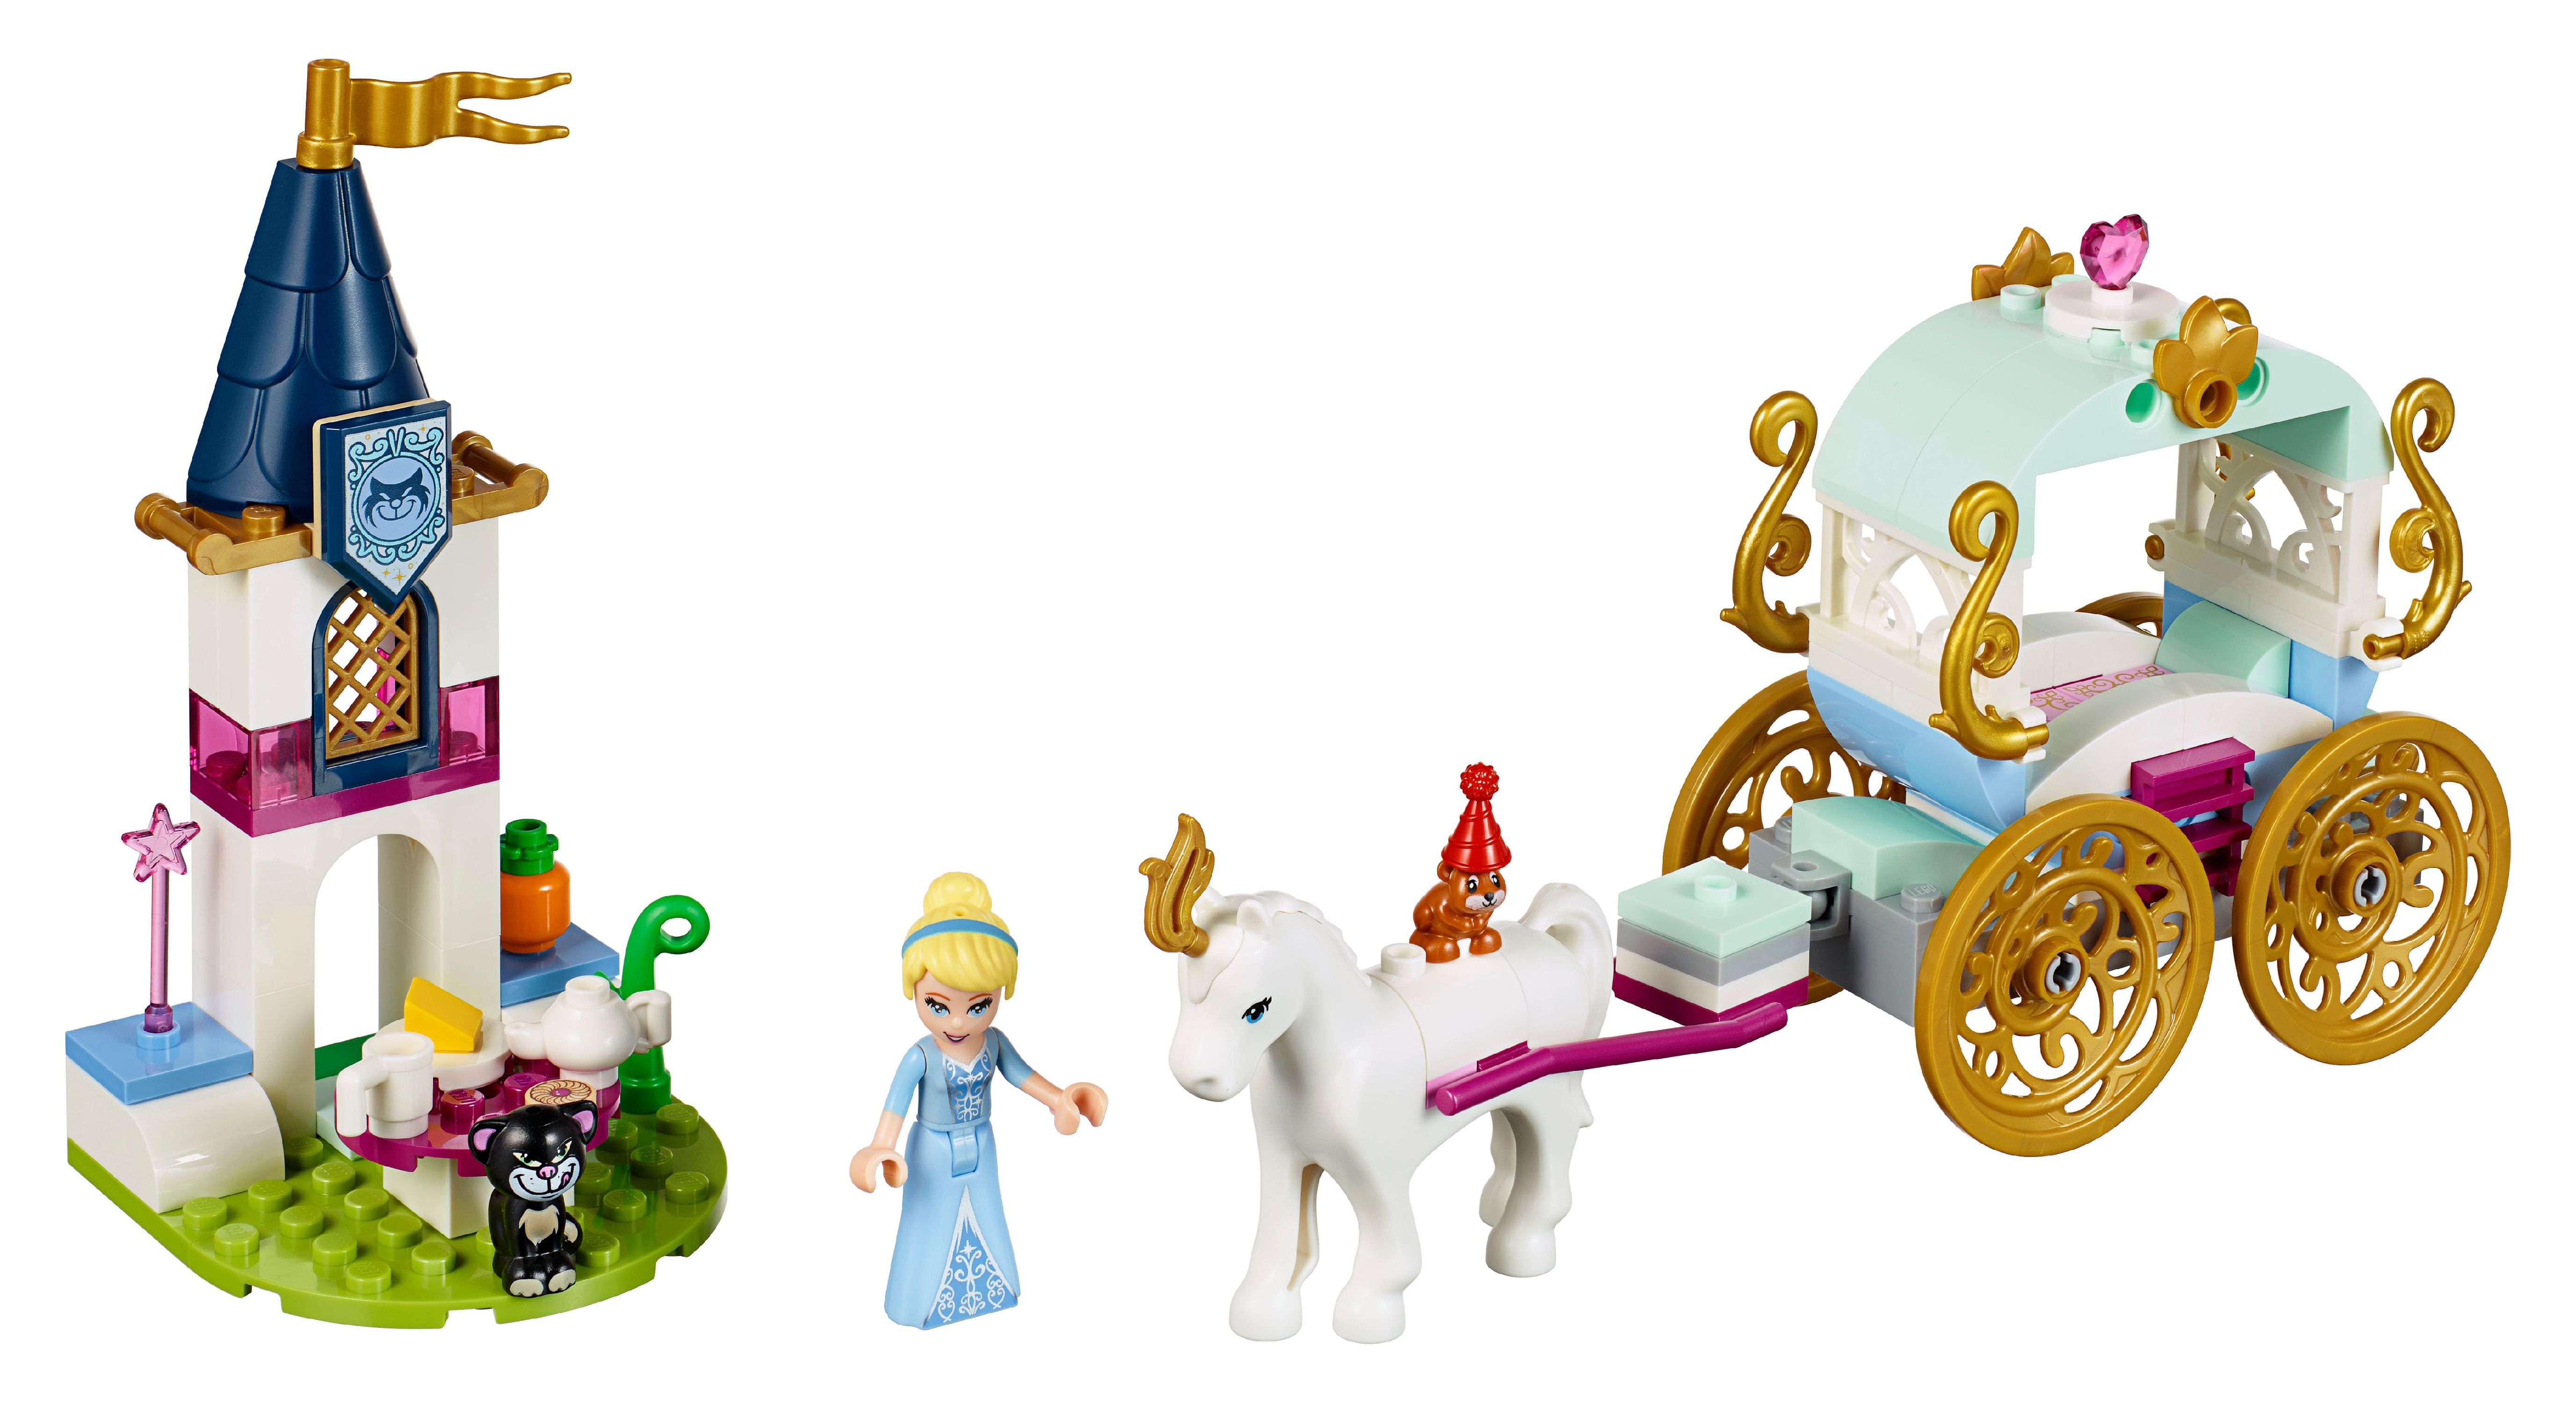 LEGO Disney Princess Cinderella's Carriage Ride Toy 41159 - image 3 of 8